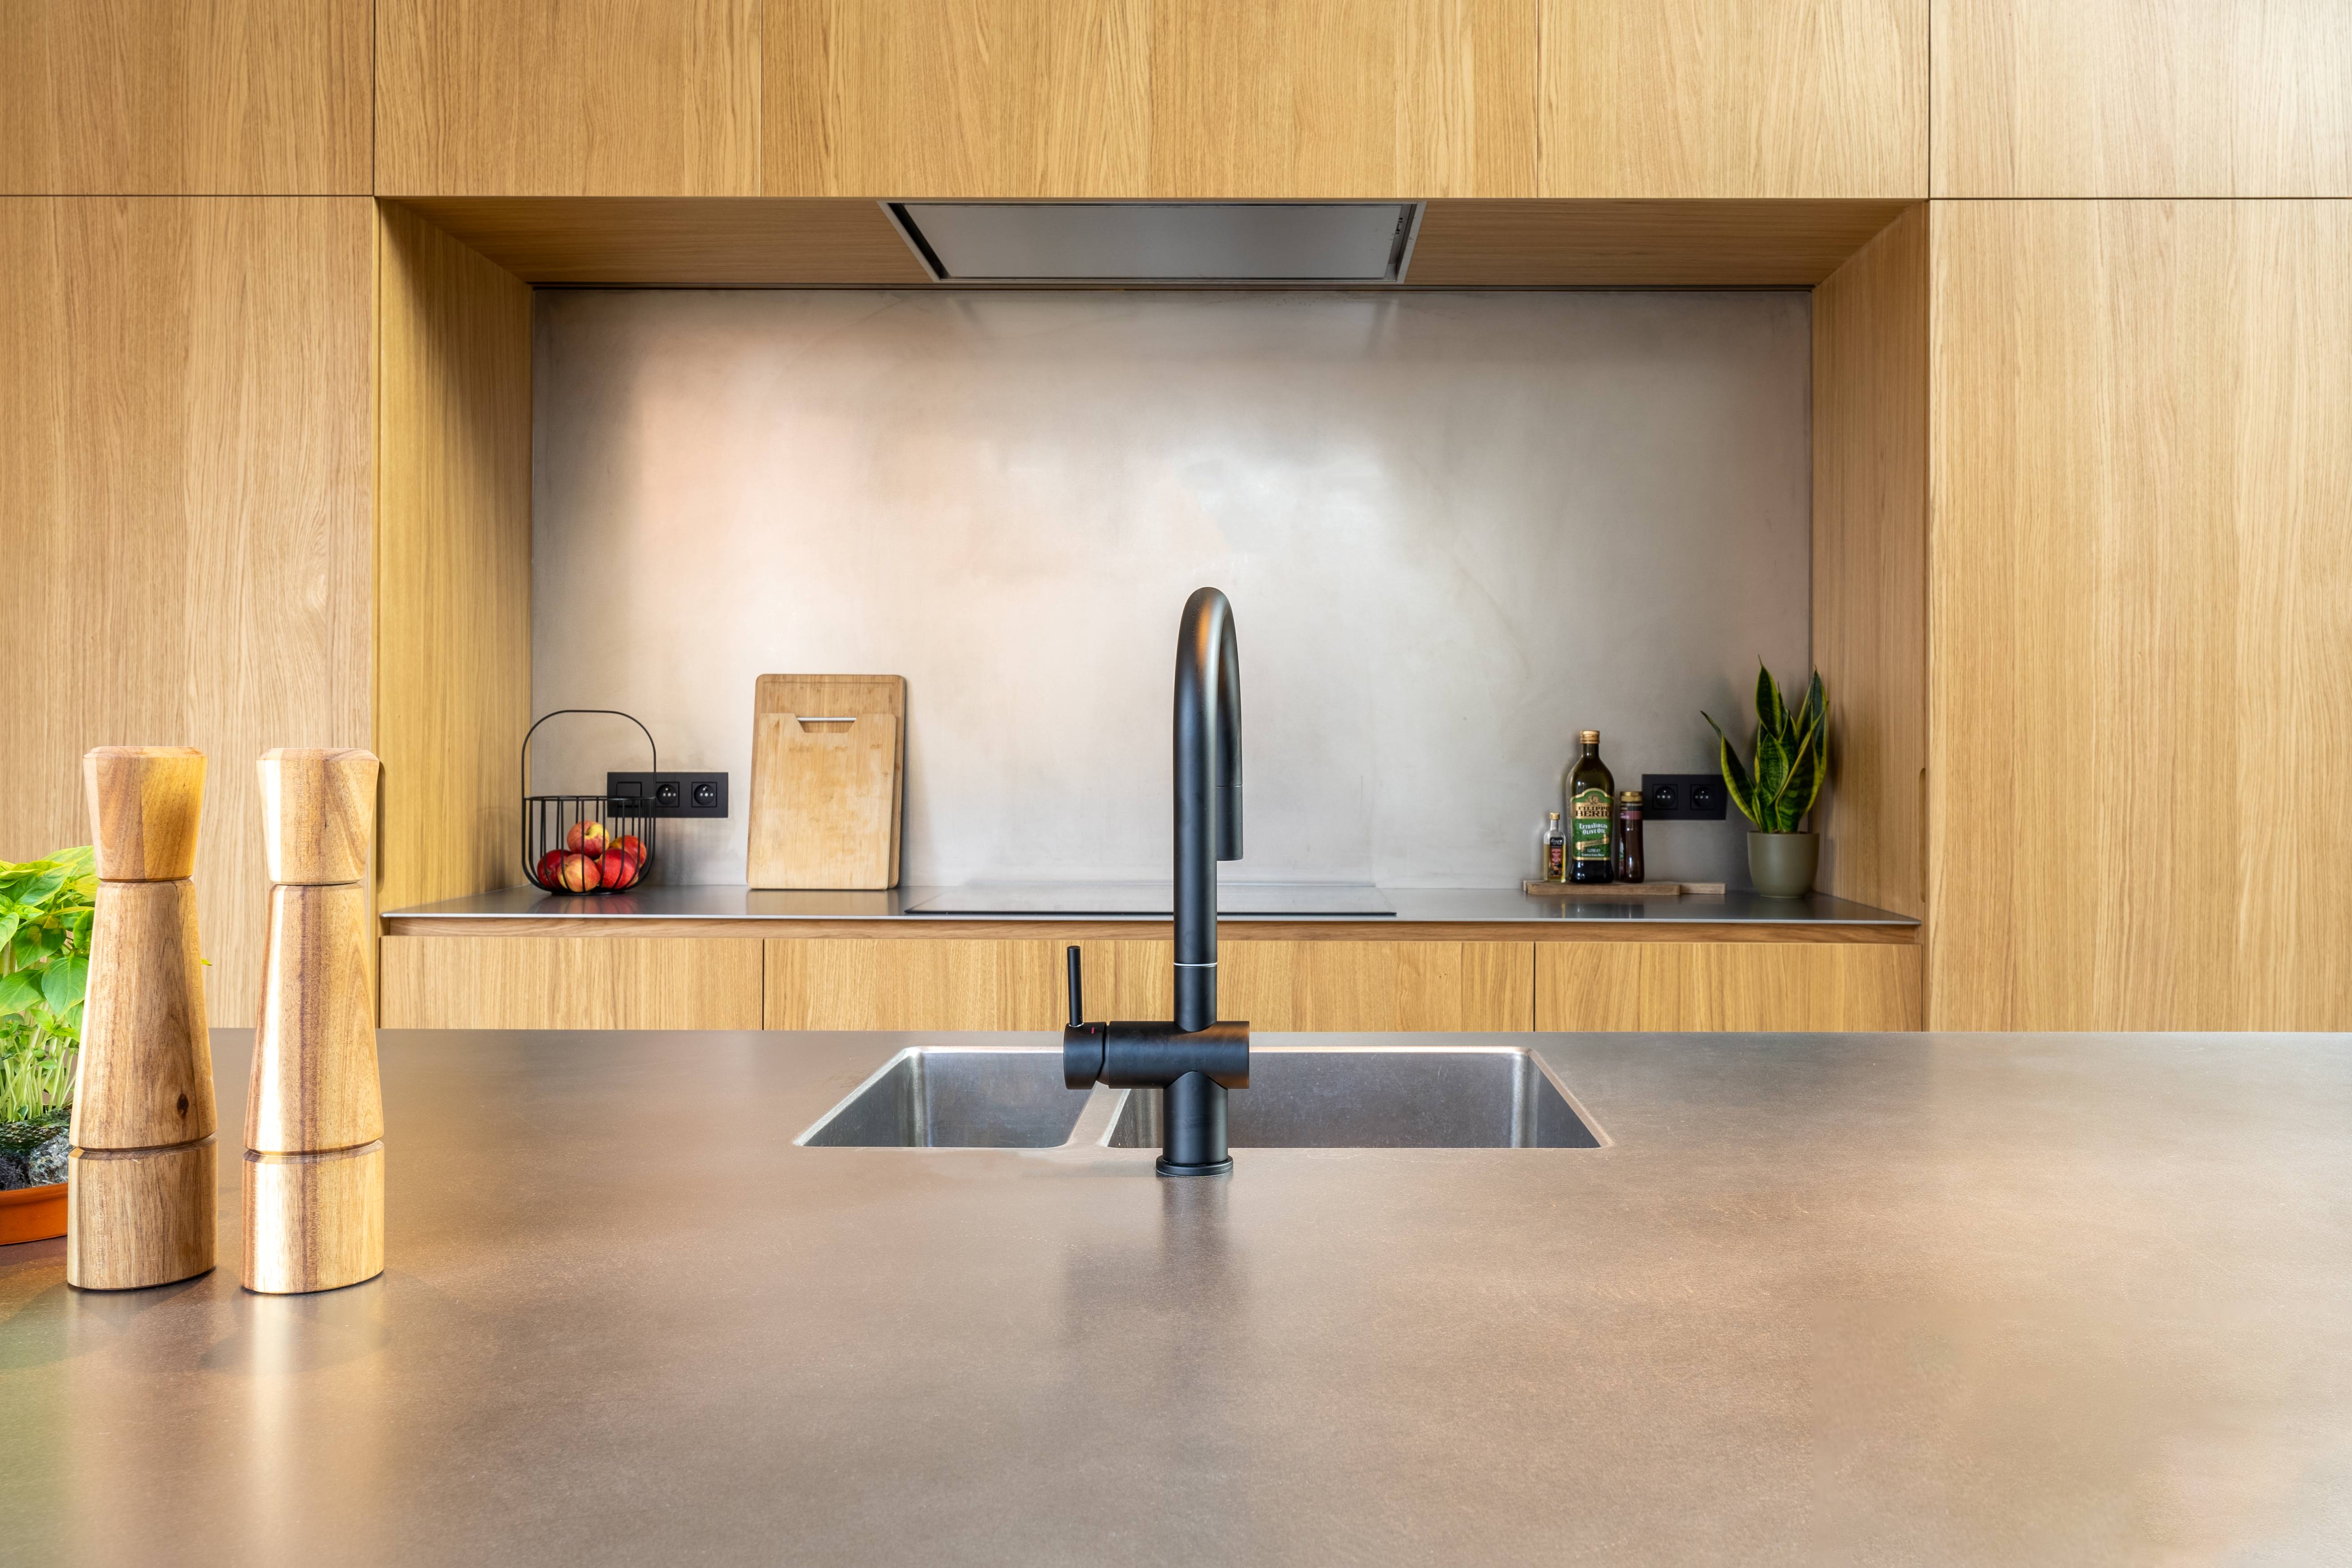 Oak kitchen - kitchen - Shinnoki - veneer panels - veneer - oak kitchen - Shinnoki kitchen